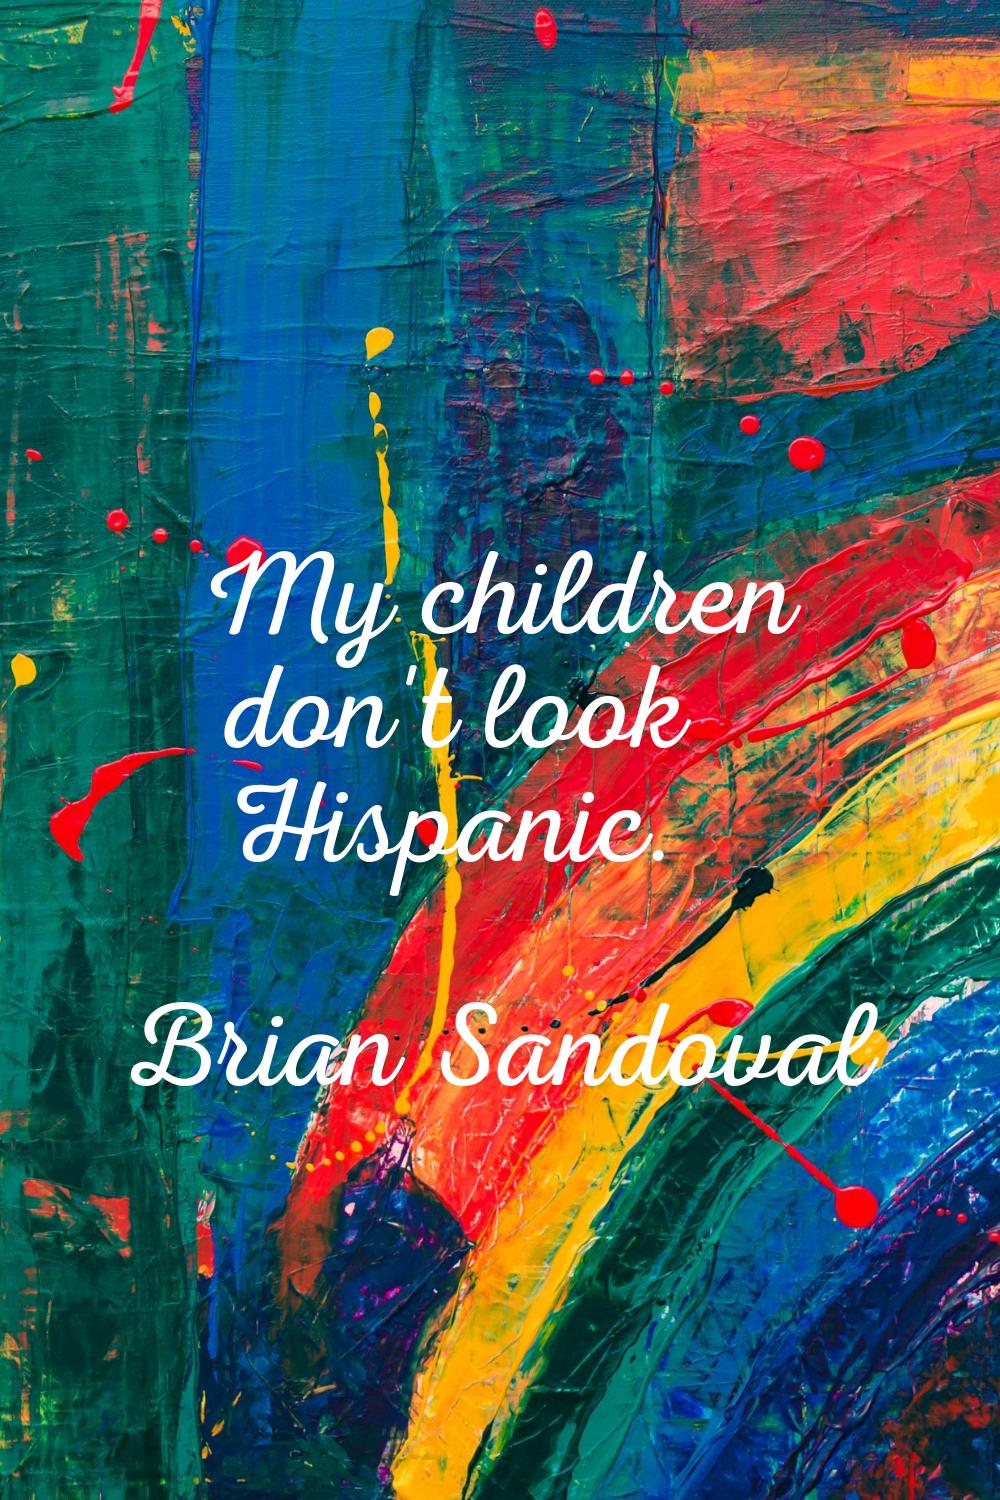 My children don't look Hispanic.